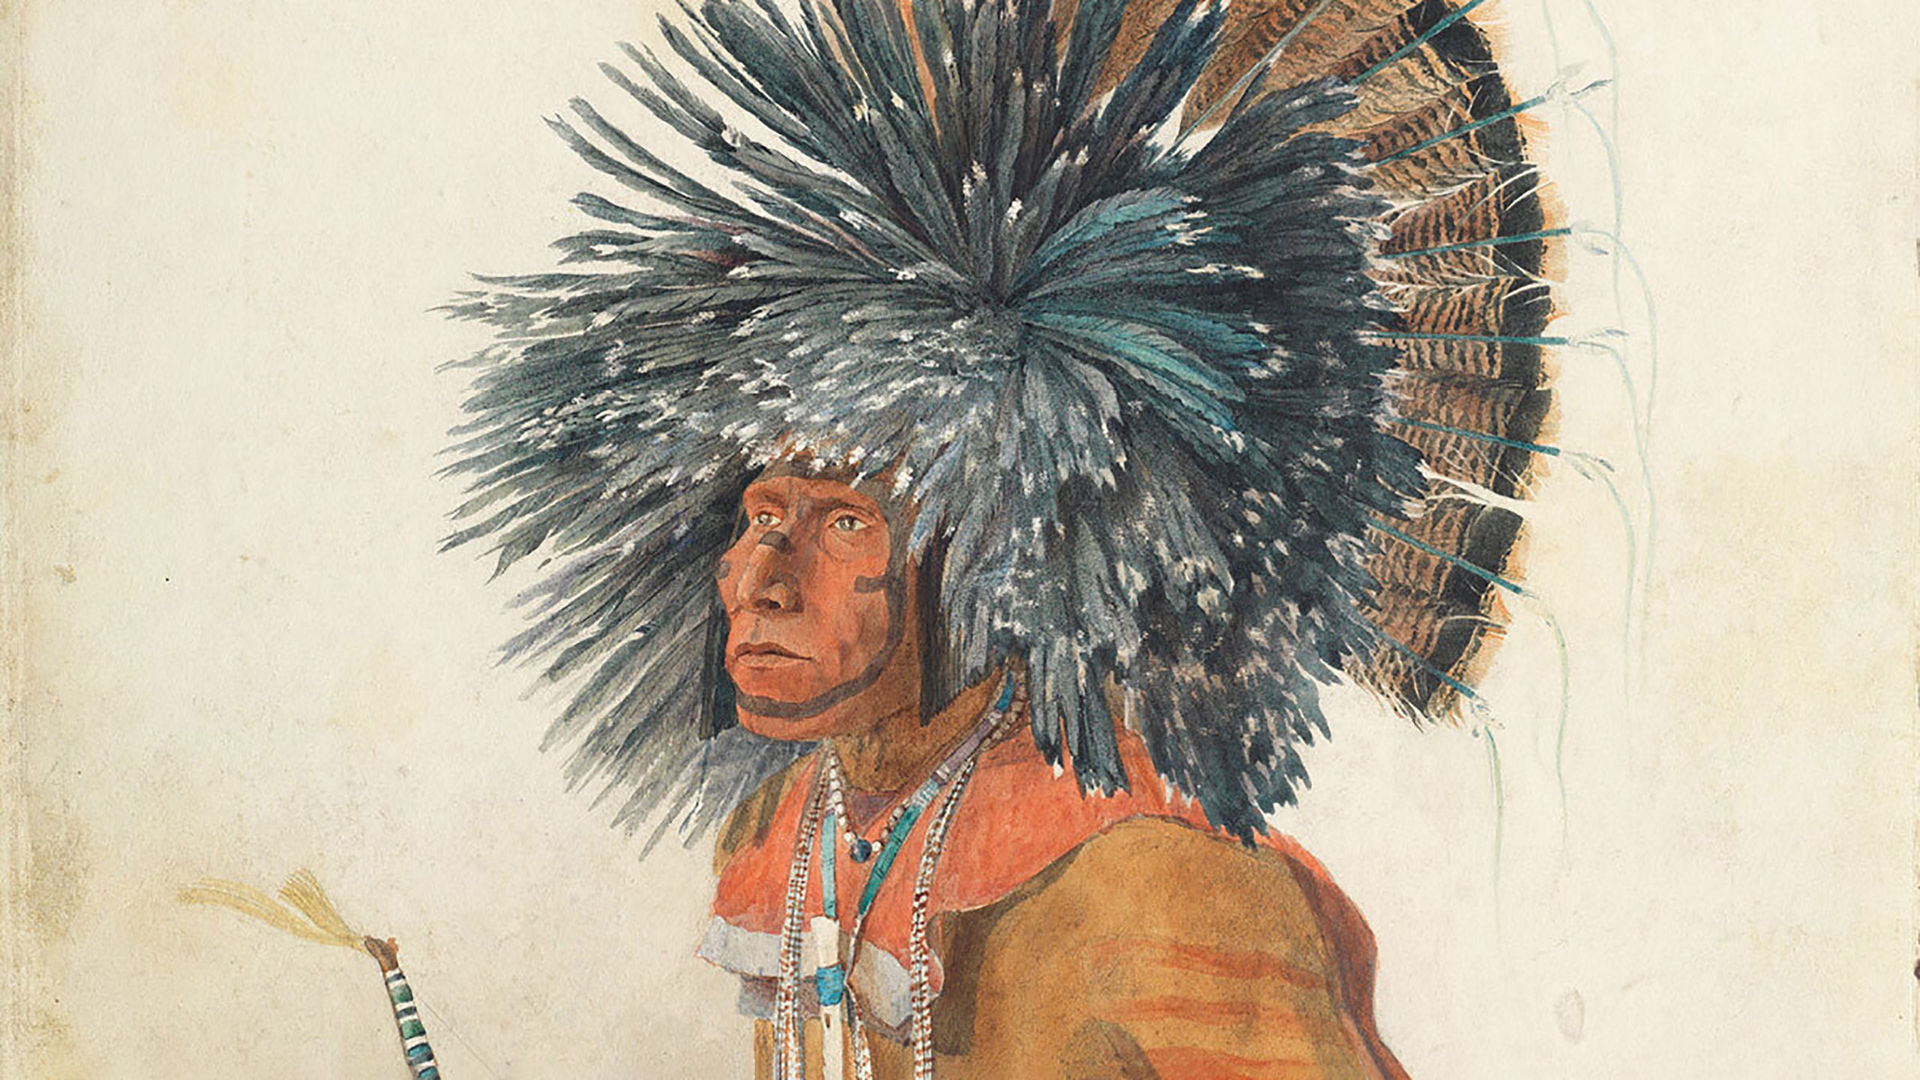 A portrait of a Native American man by Karl Bodmer